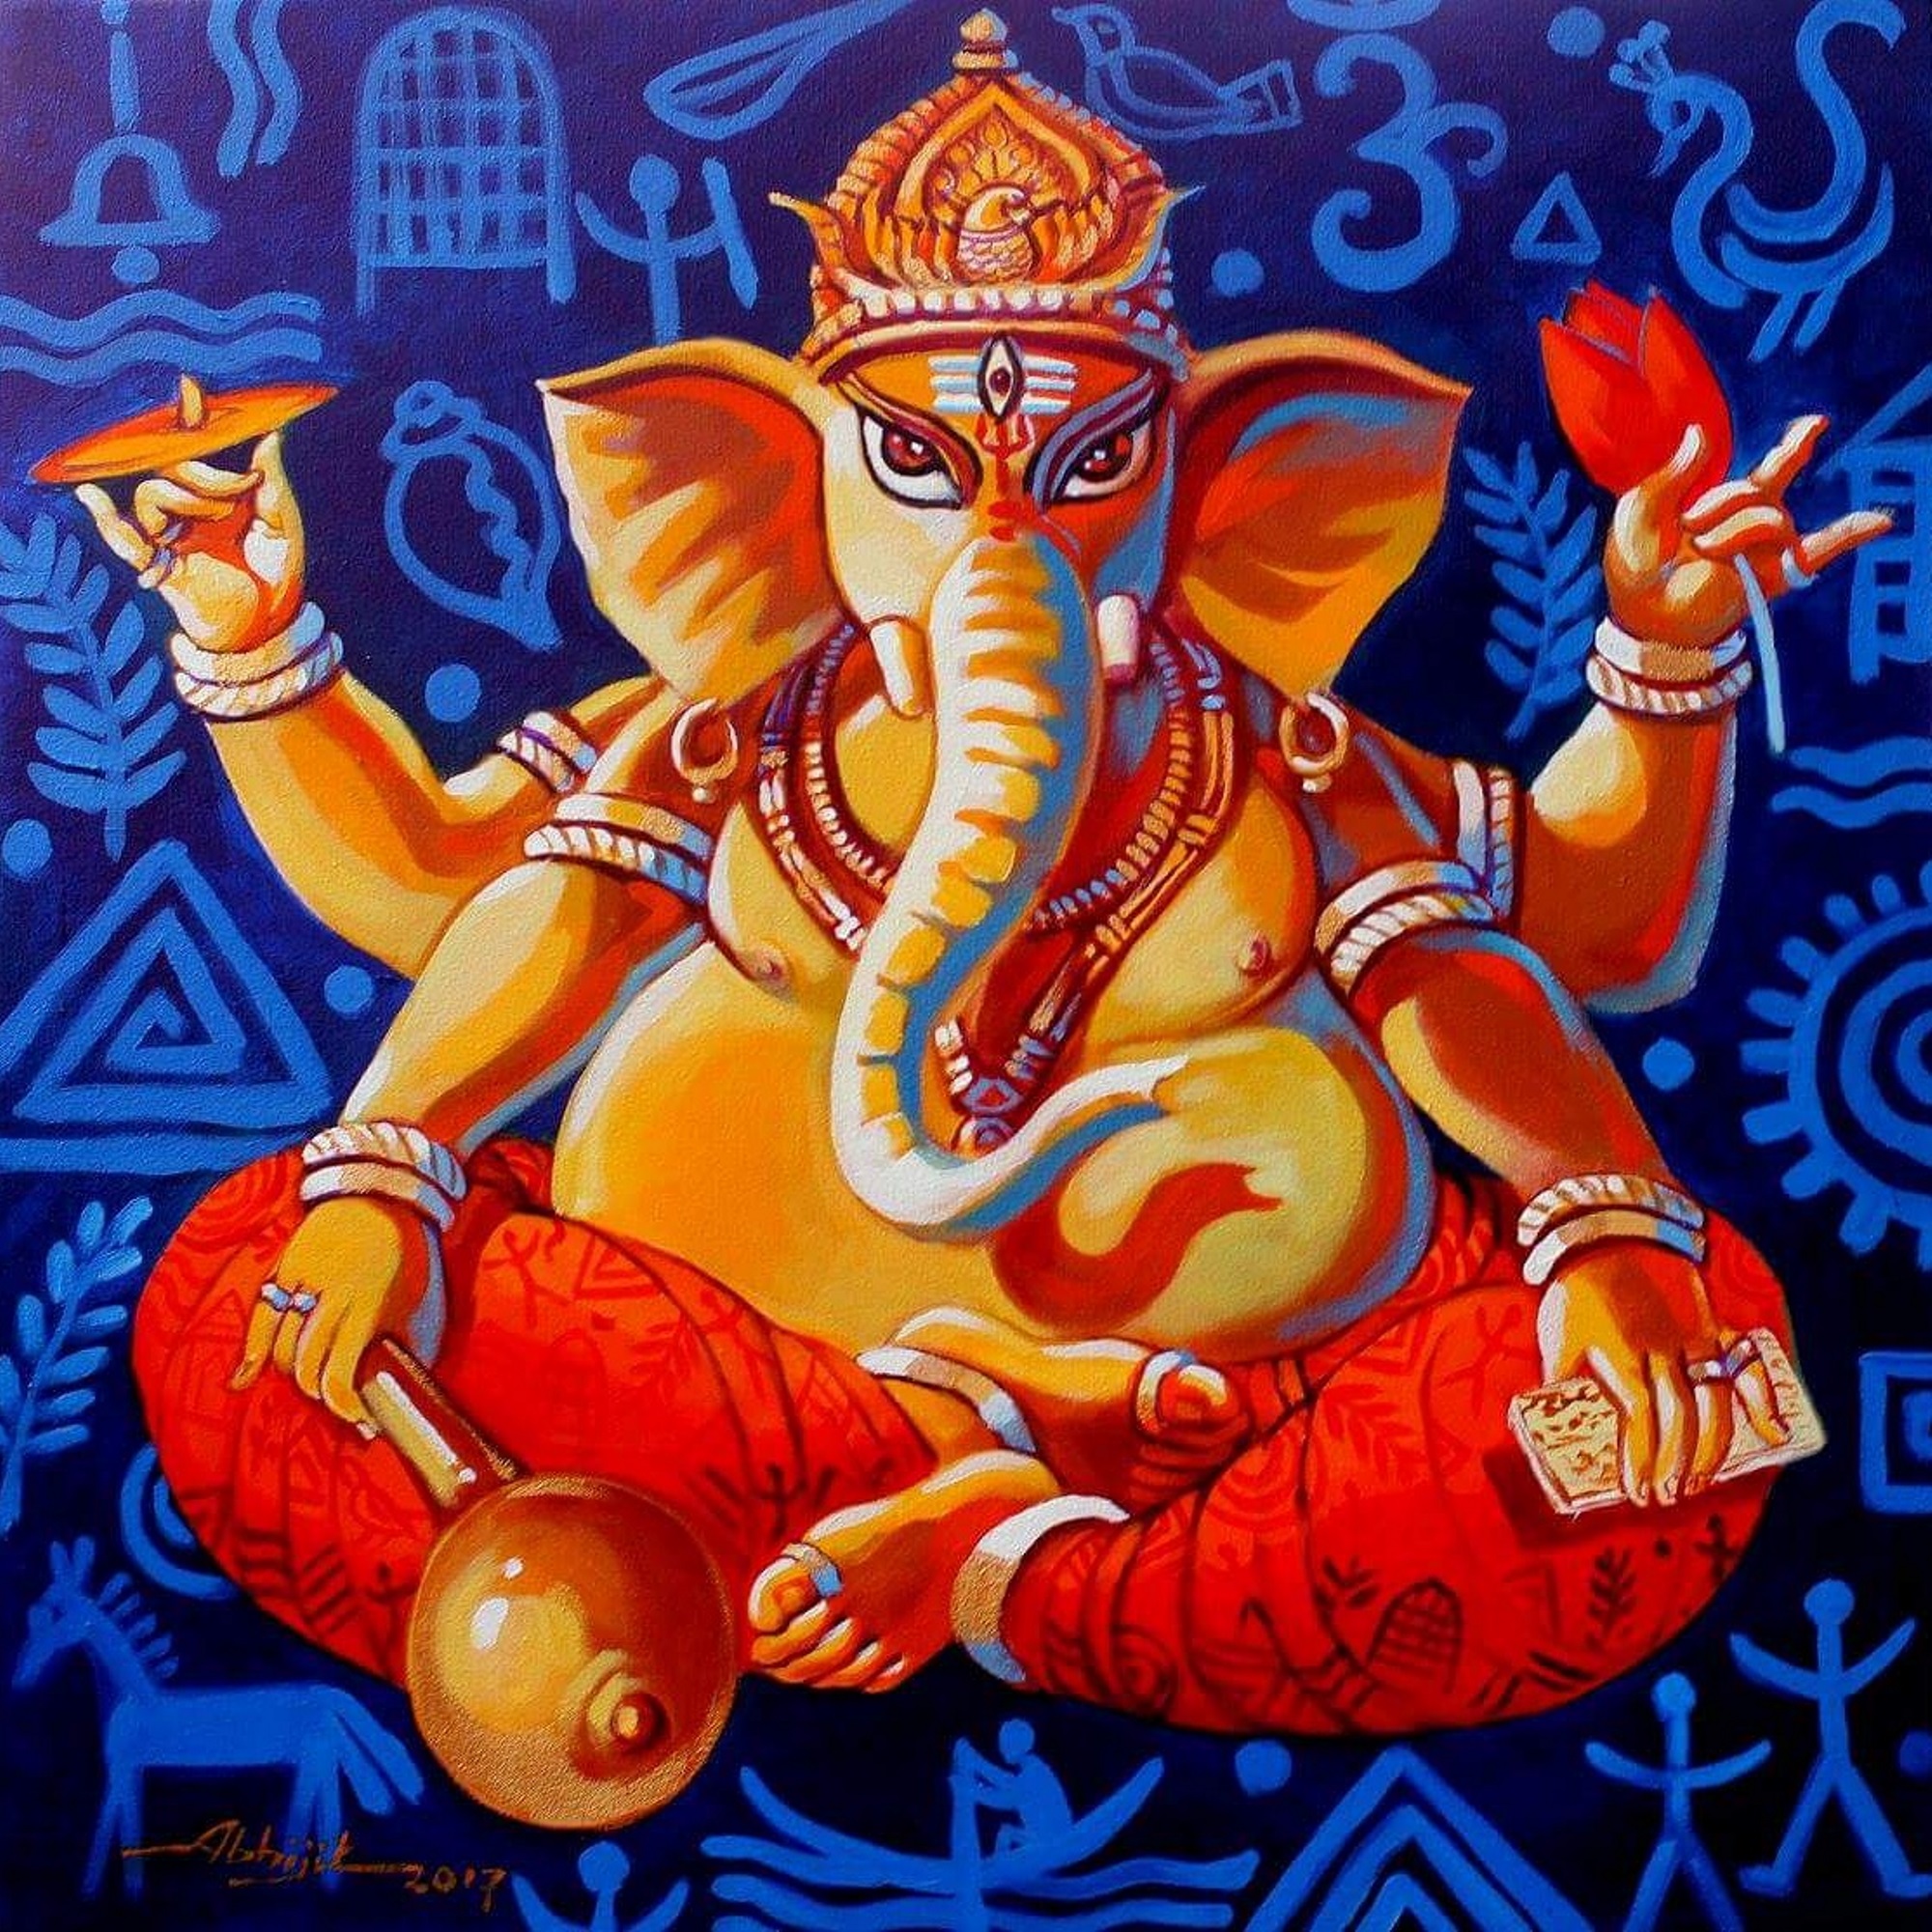 Handcrafted Lord Ganesha Idols for home decor |Meditating Ganesh|Ganesha  Idol for car dashboard, gifts And home|Ganesha statue in Religious Idols|  Showpiece for living room|Ganesh ji ki murti|ganpati